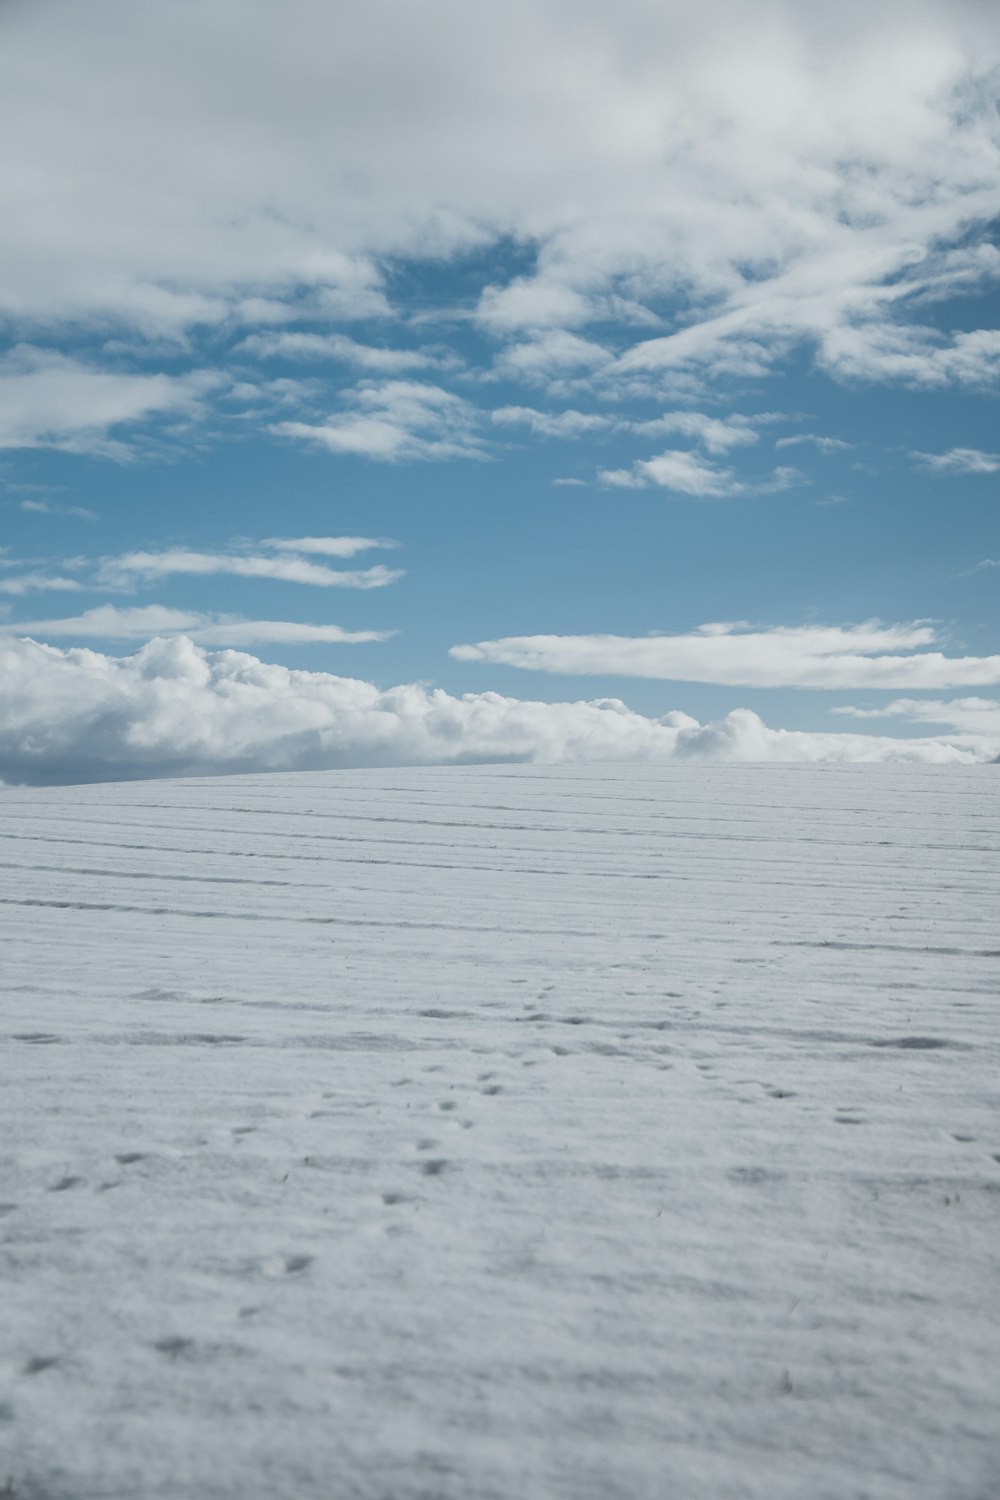 a vast expanse of white snow under a blue sky